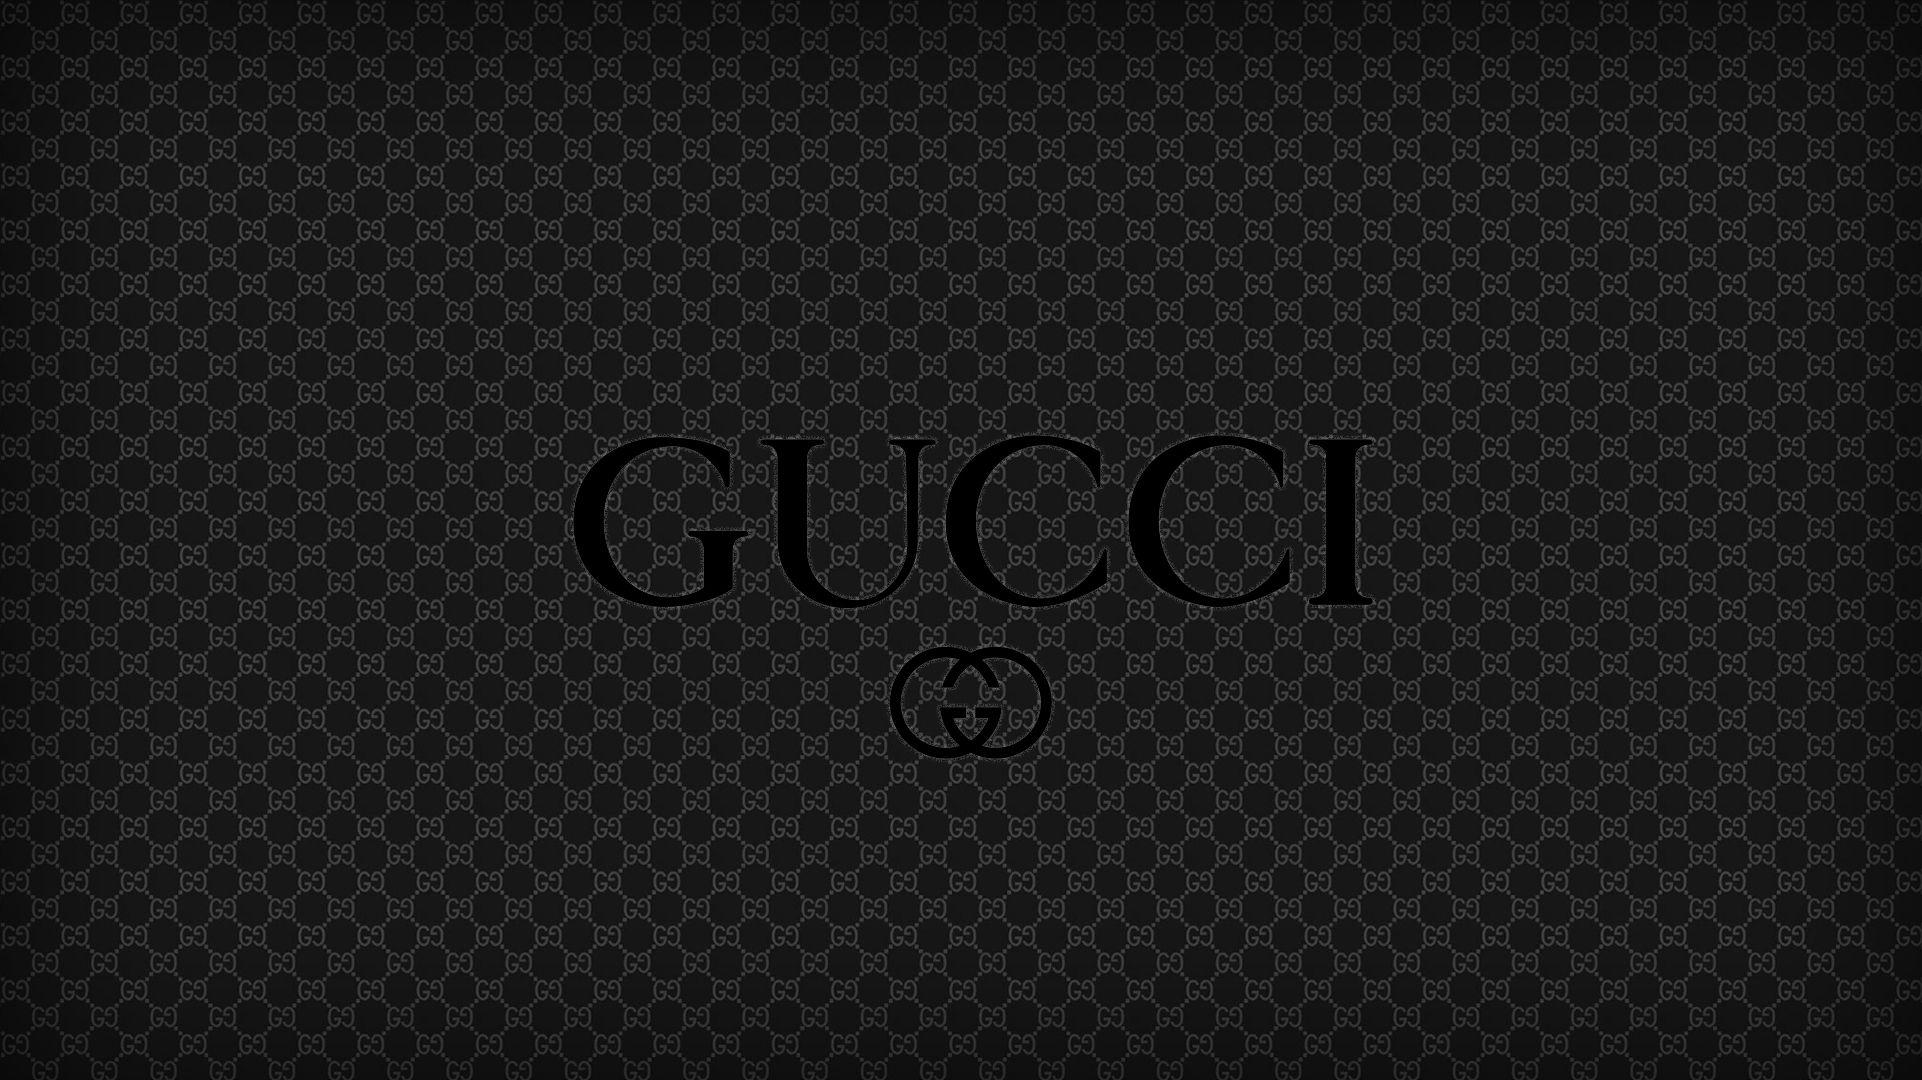 Gucci Desktop Wallpapers Top Free Gucci Desktop Backgrounds Wallpaperaccess